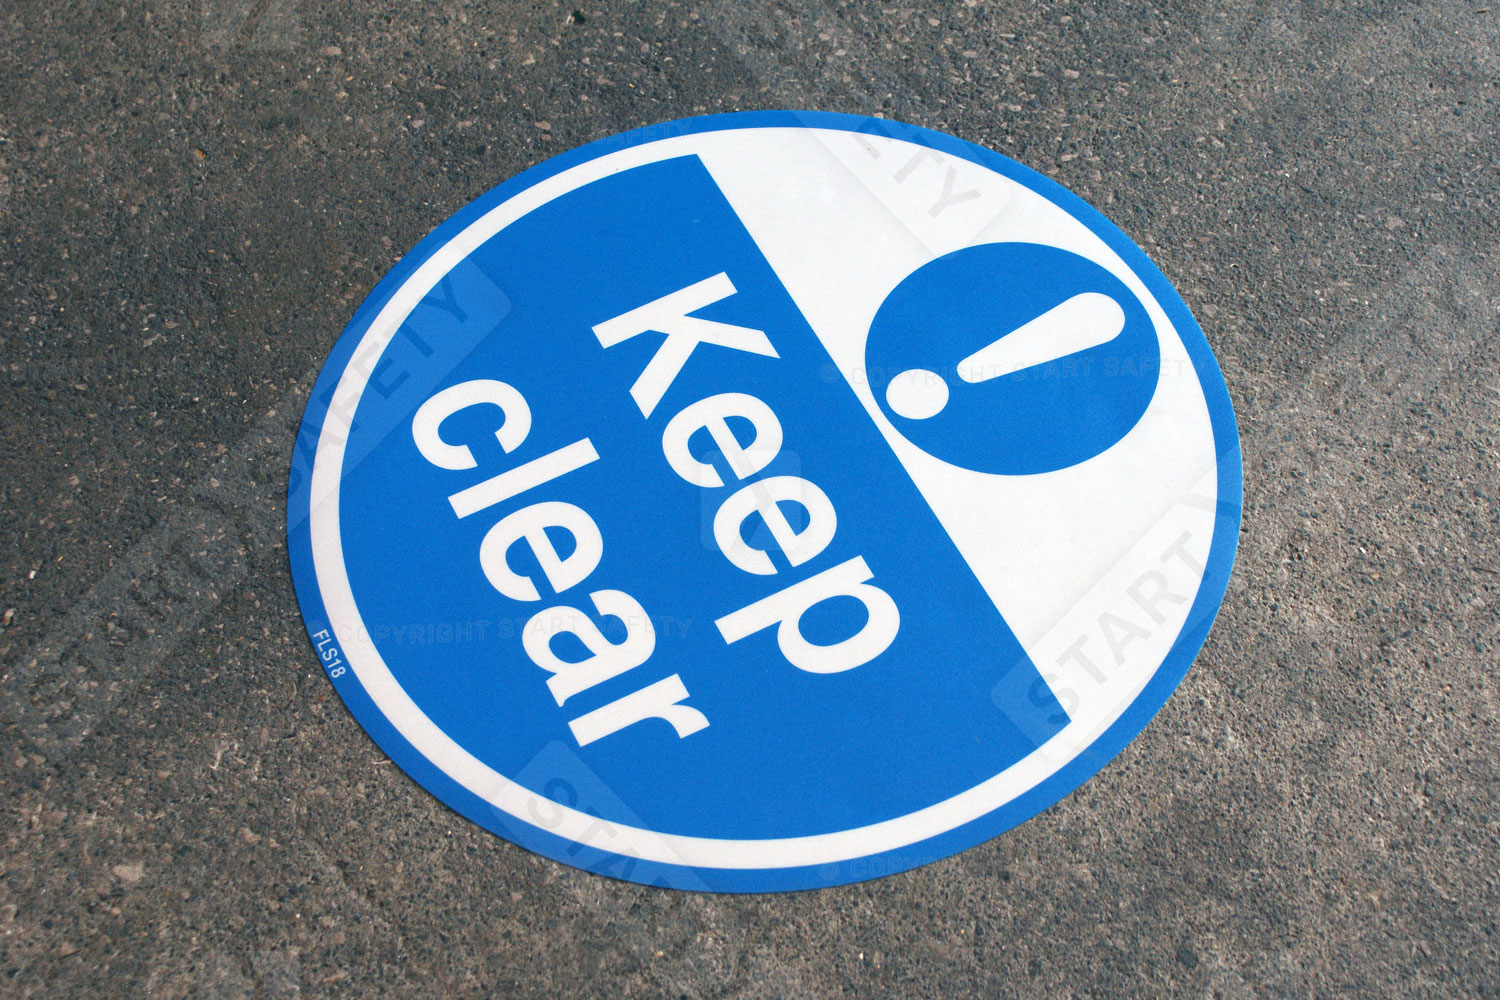 floor sticker applied to tarmac